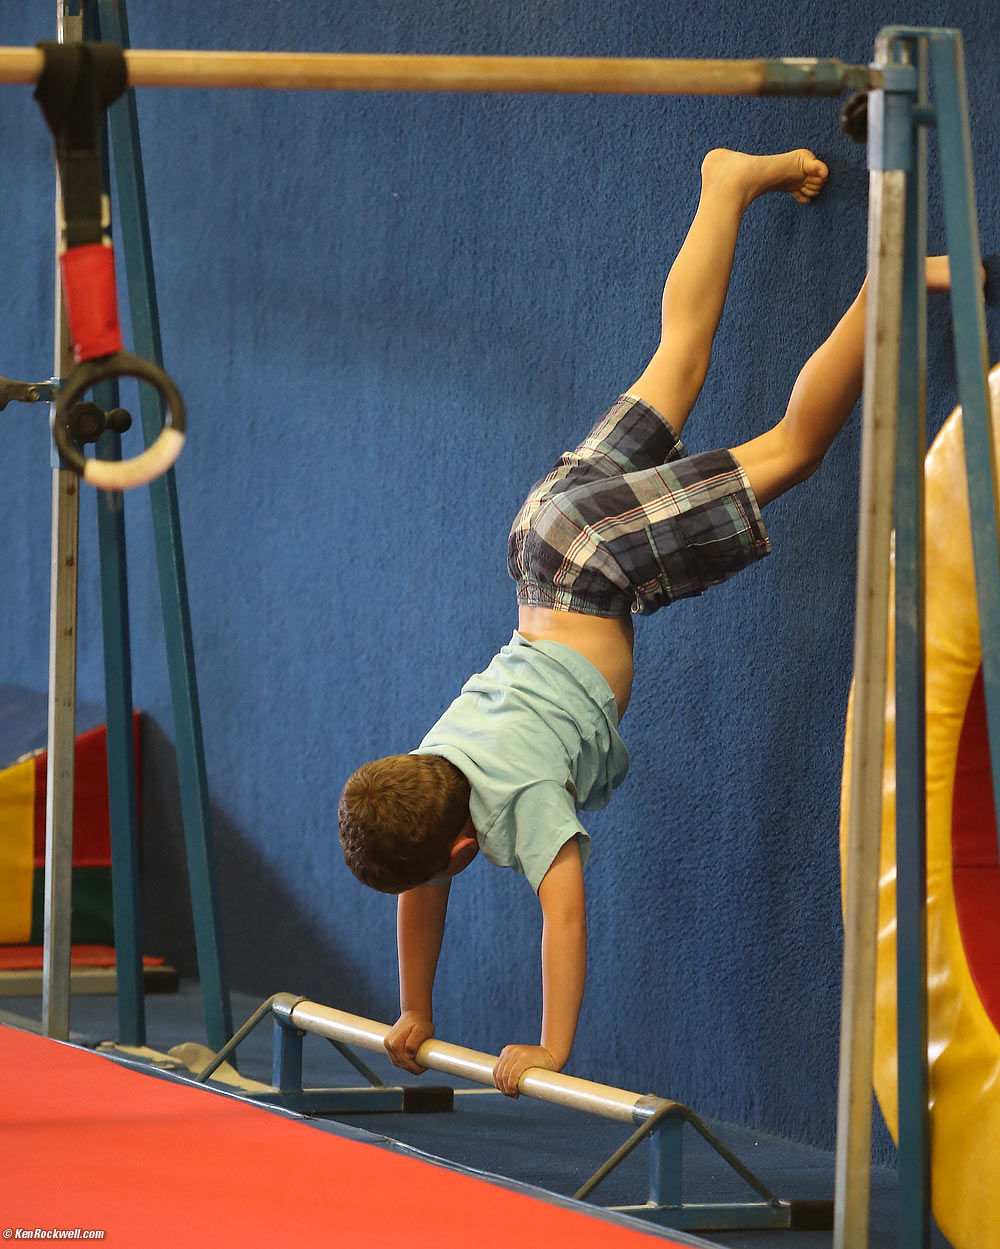 Ryan at Gymnastics